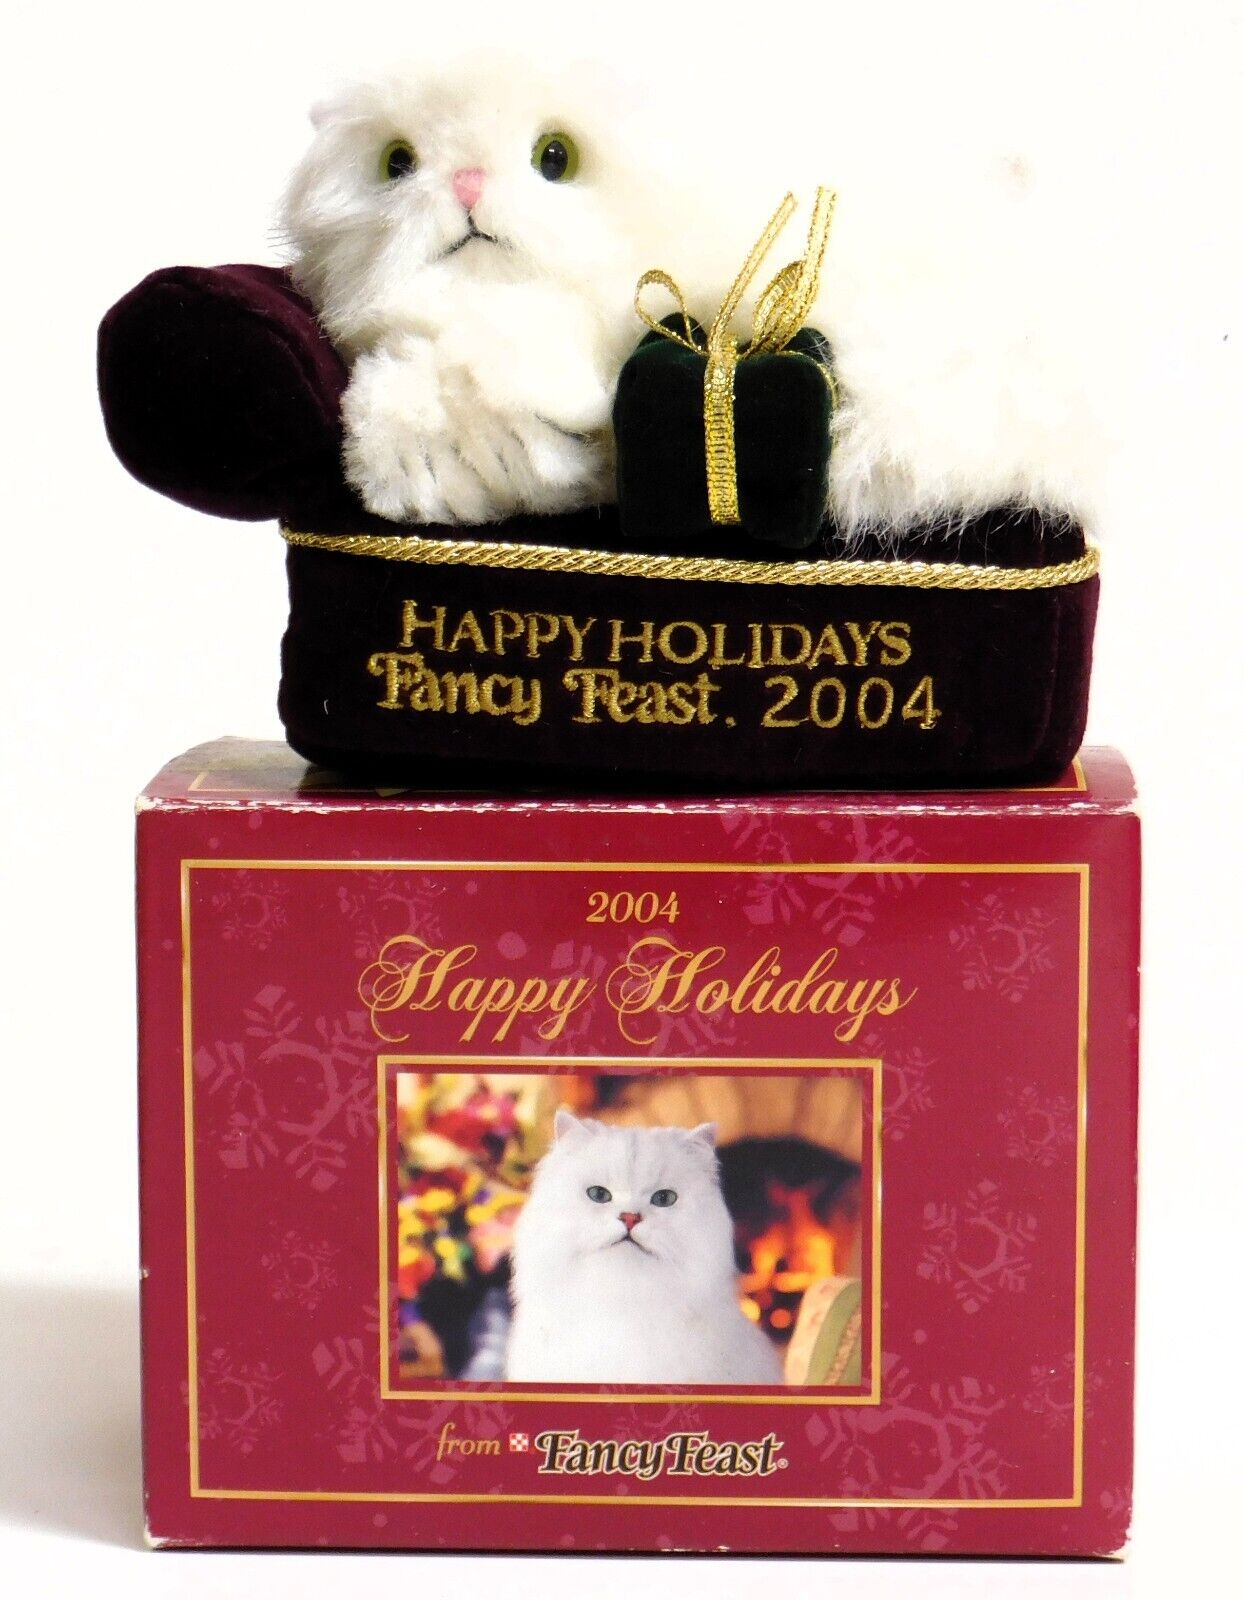 Vintage 2004 Fancy Feast Happy Holidays Cat Ornament - New in Box - NIB